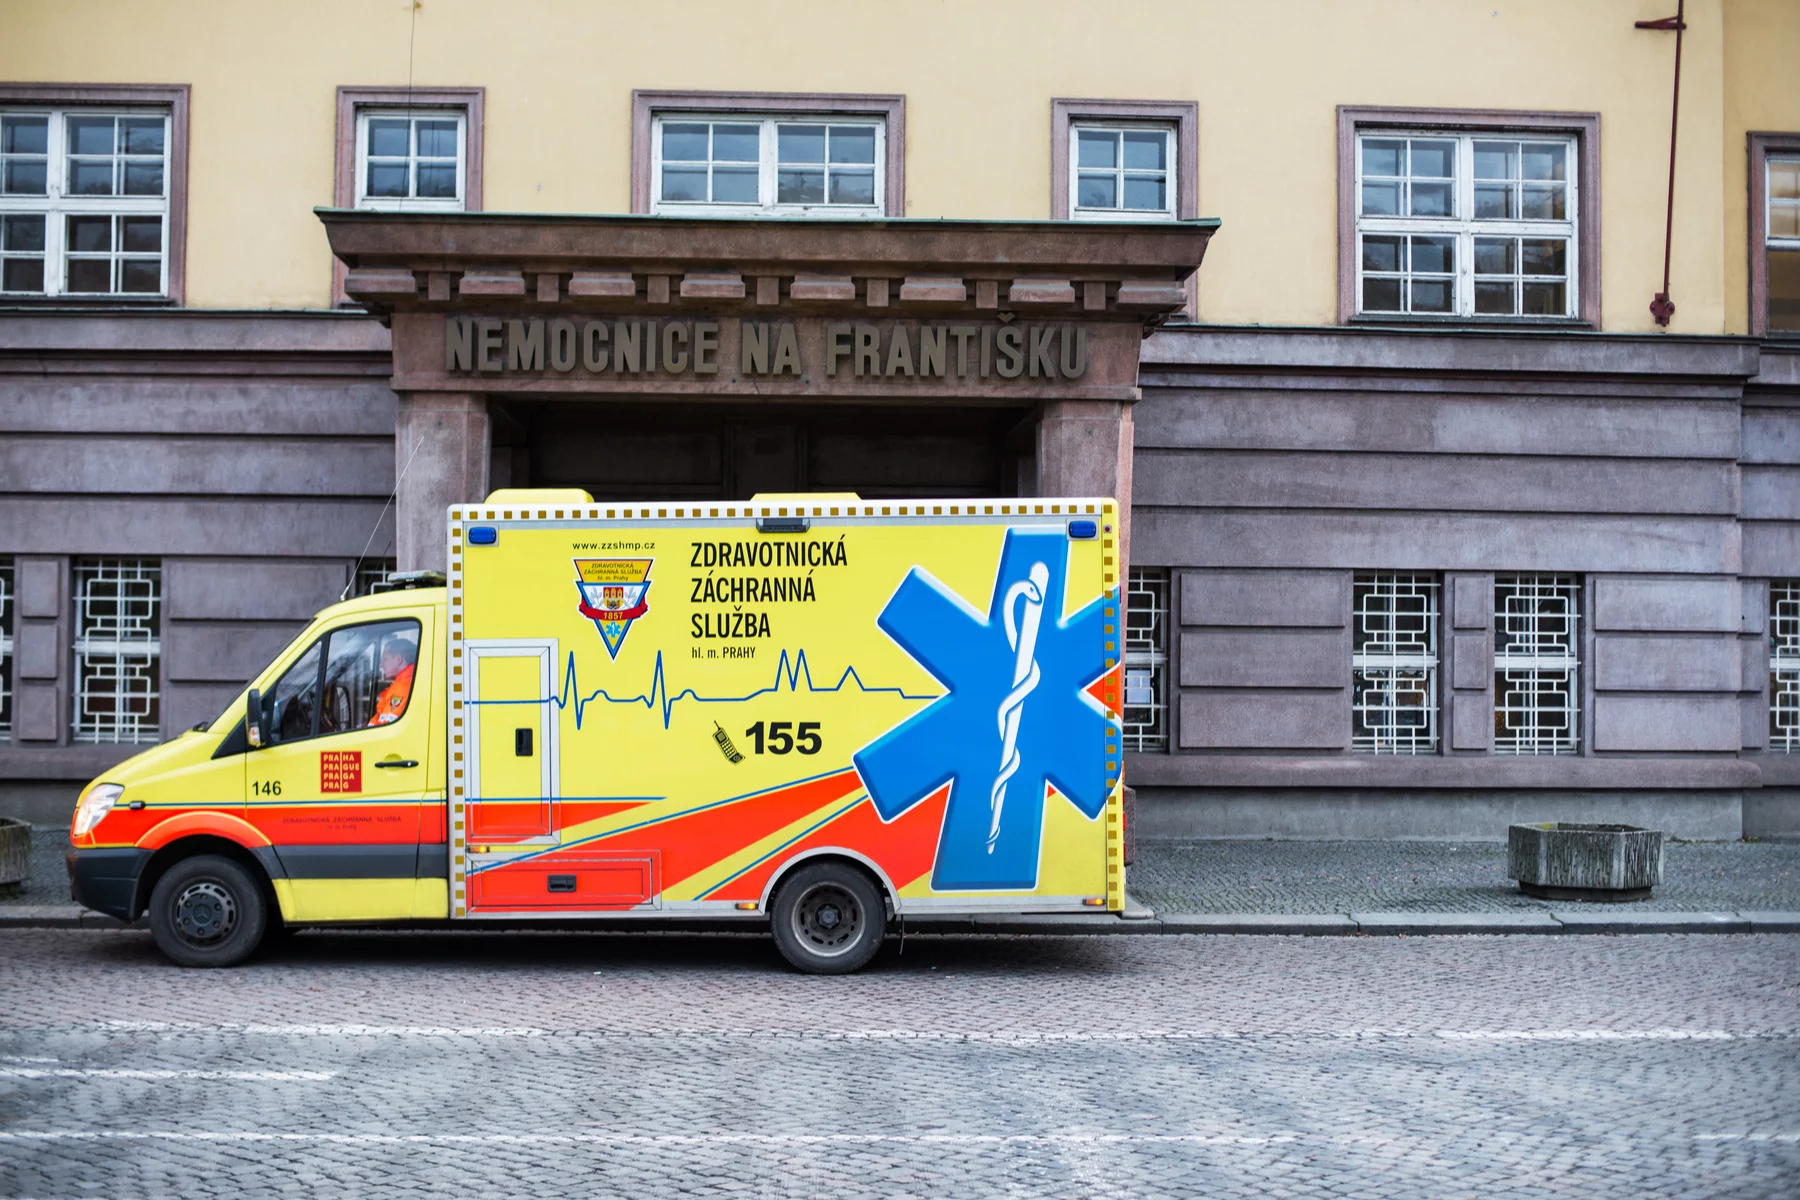 An ambulance in Prague